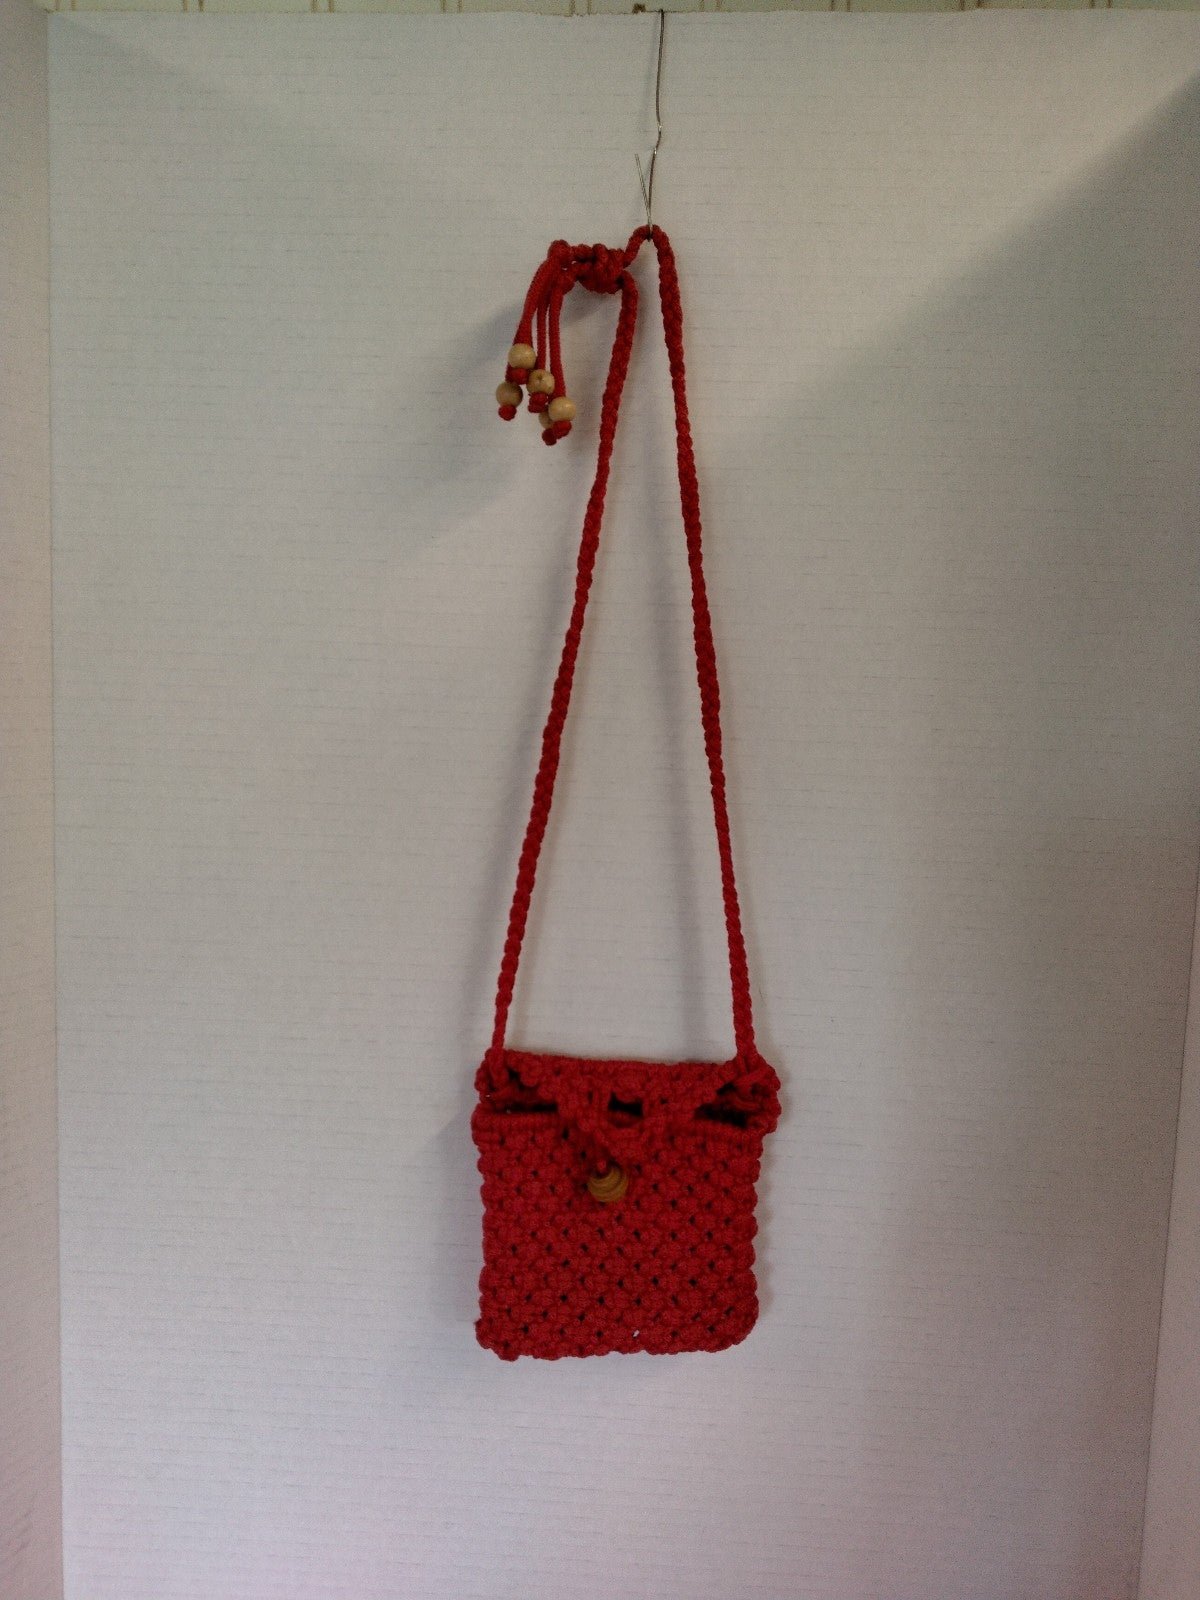 macrame crochet 4 X 4 bag red with wood beads o50sfhqgm